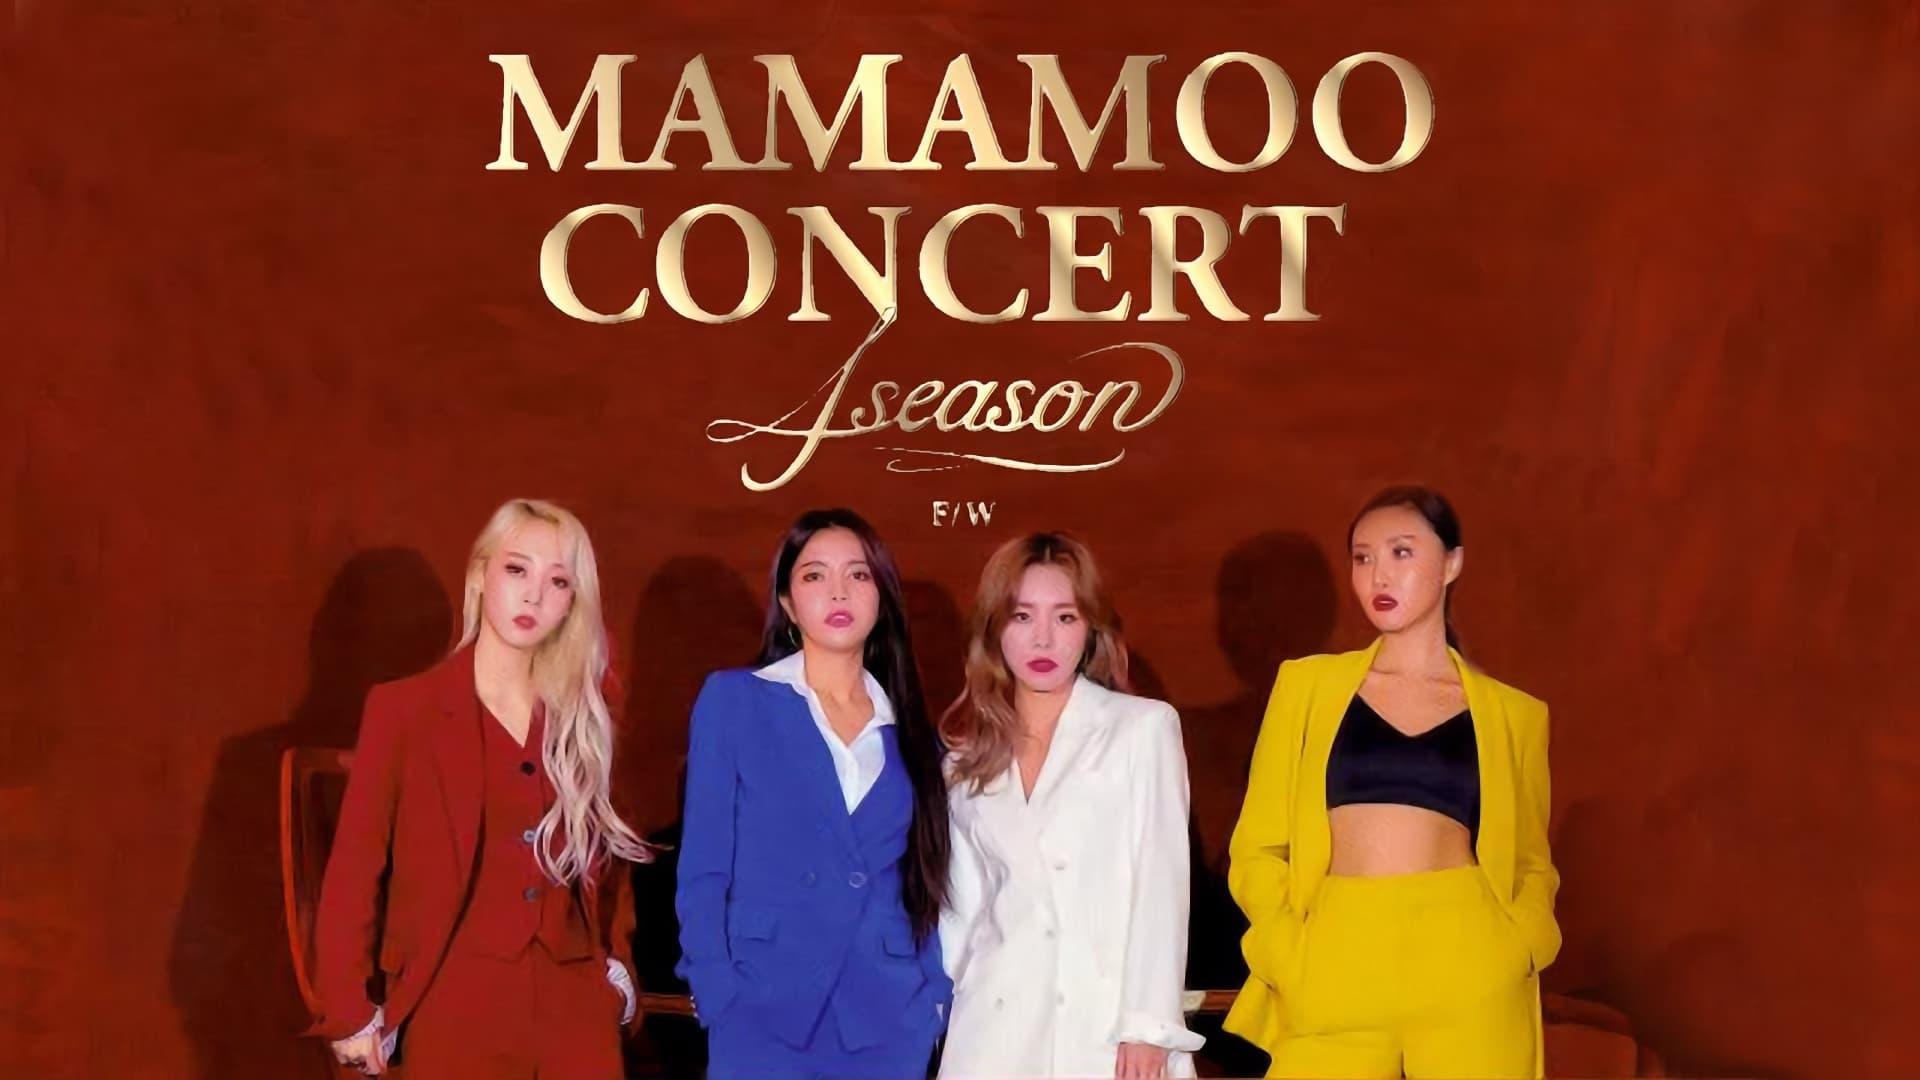 Mamamoo 4season F/W Concert backdrop